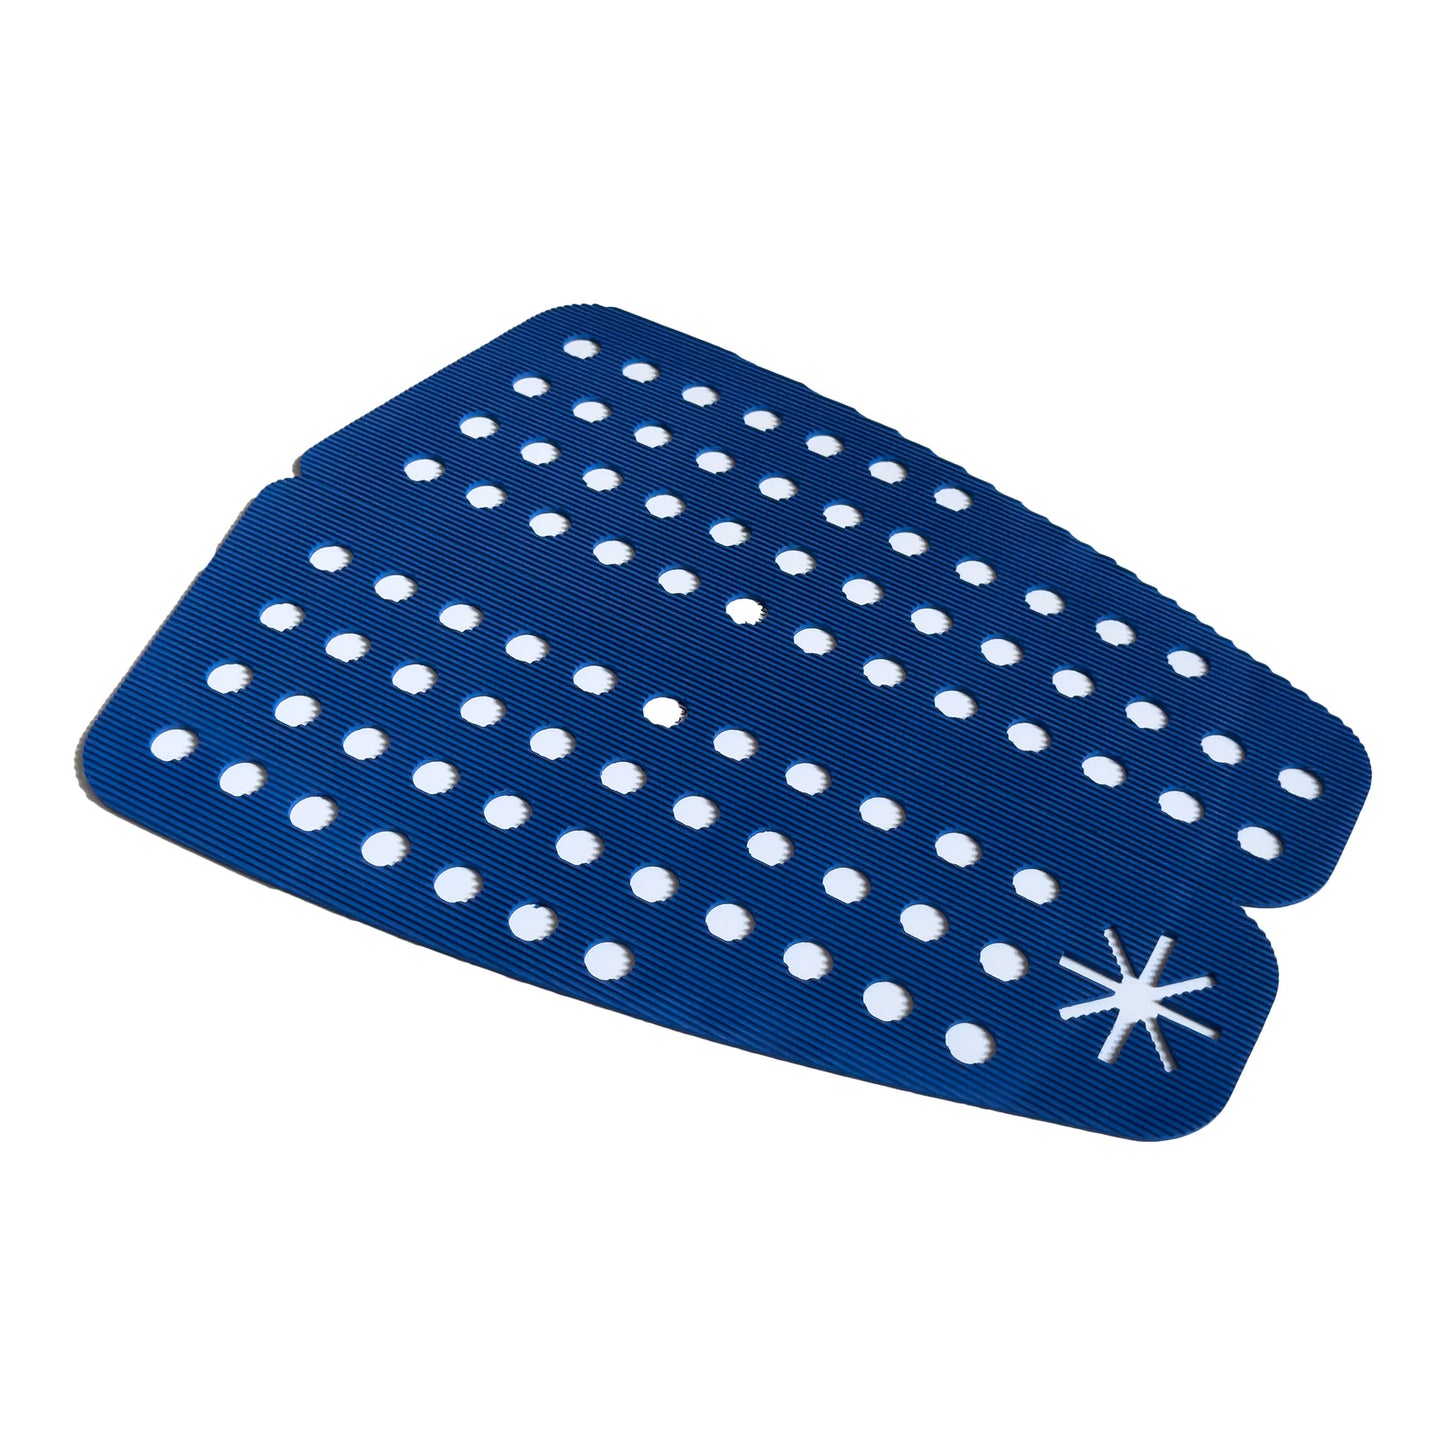 BALLET NOAH COLLINS SIG. 2-Piece Signature Deck Pad for Hybrid + Alternative COMPUTER-BLUE 